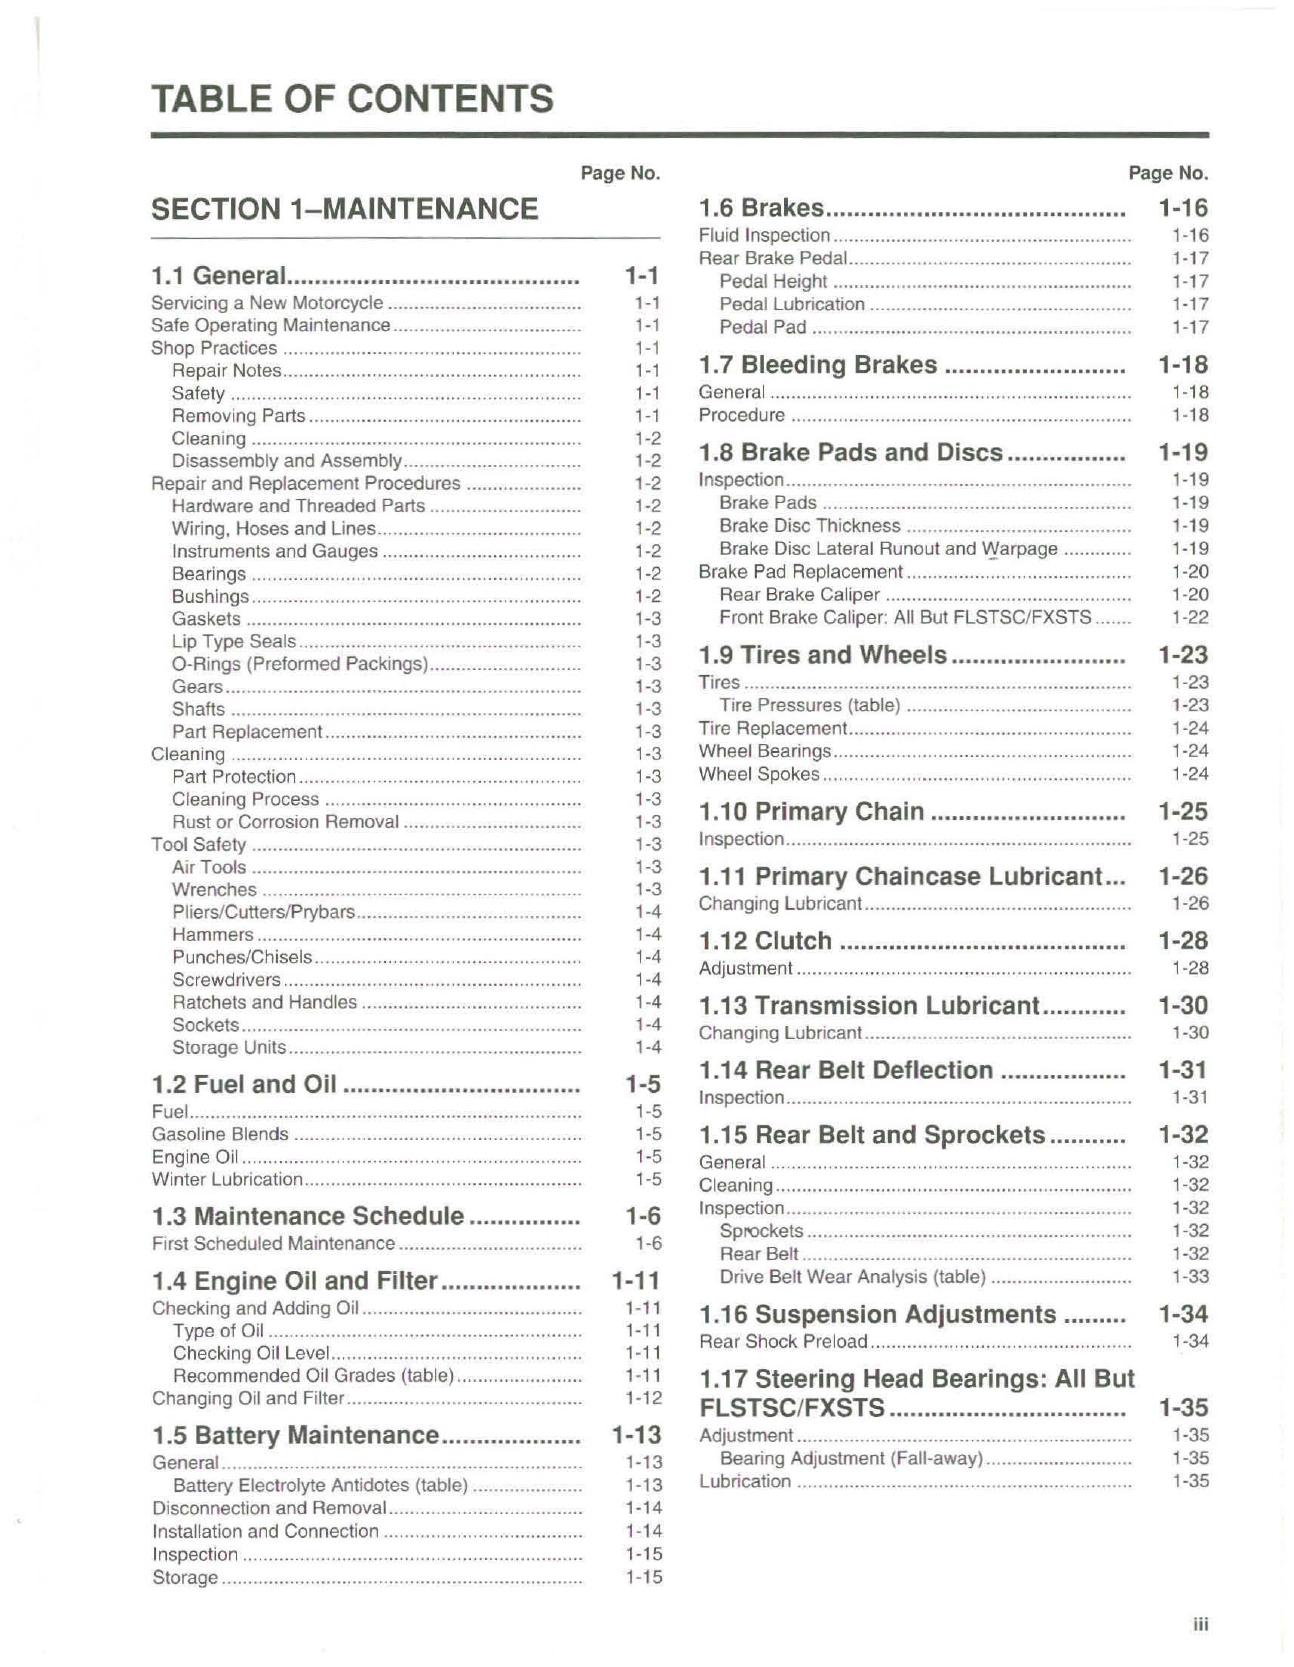 2006 Harley-Davidson Softail service manual Preview image 4